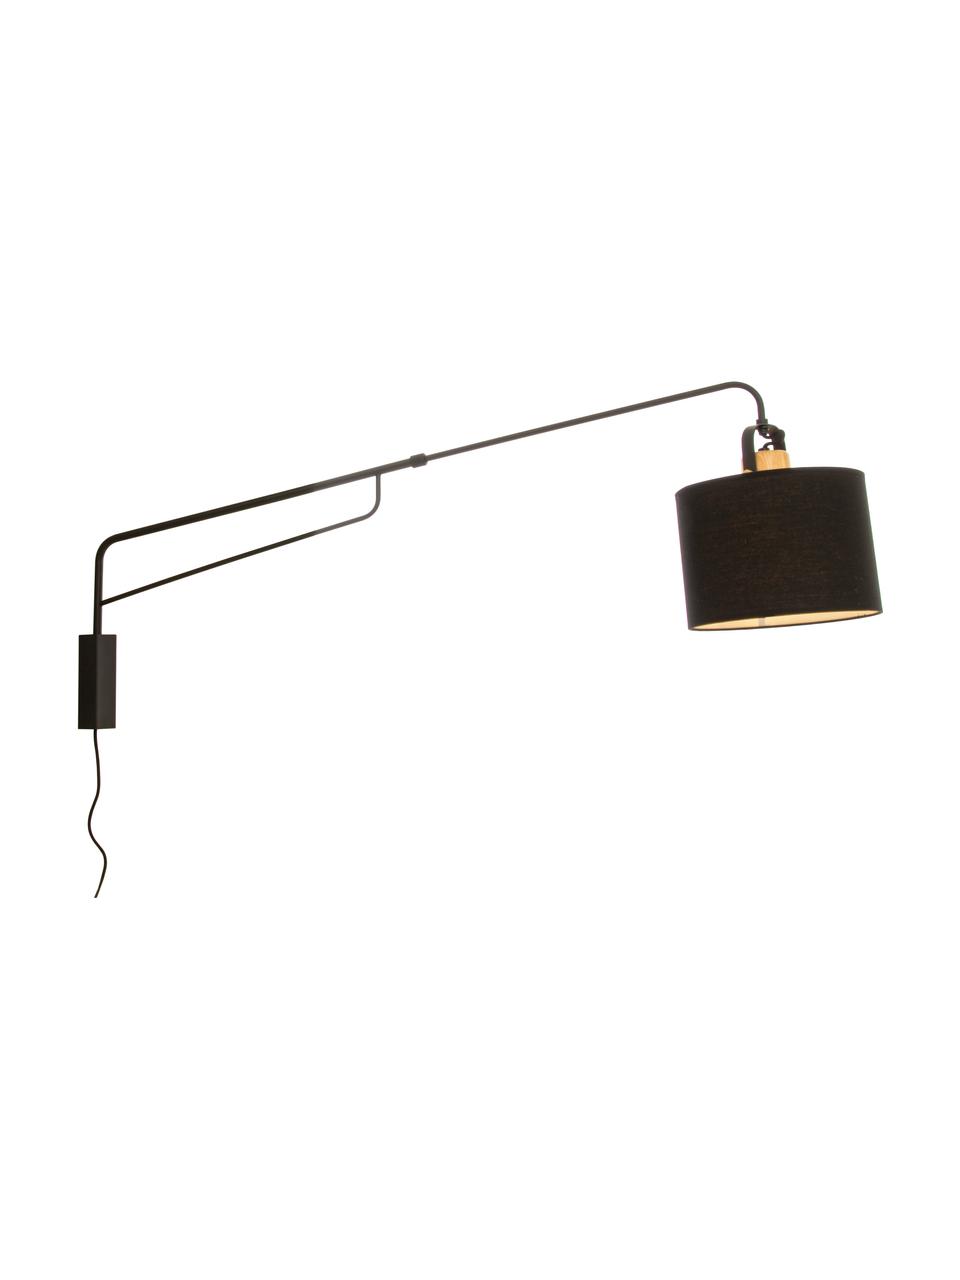 Grote wandlamp Wally met stekker en hout-decoratie, Lampenkap: 50% katoen, 50% polyester, Zwart, naturel, D 120 x H 43 cm